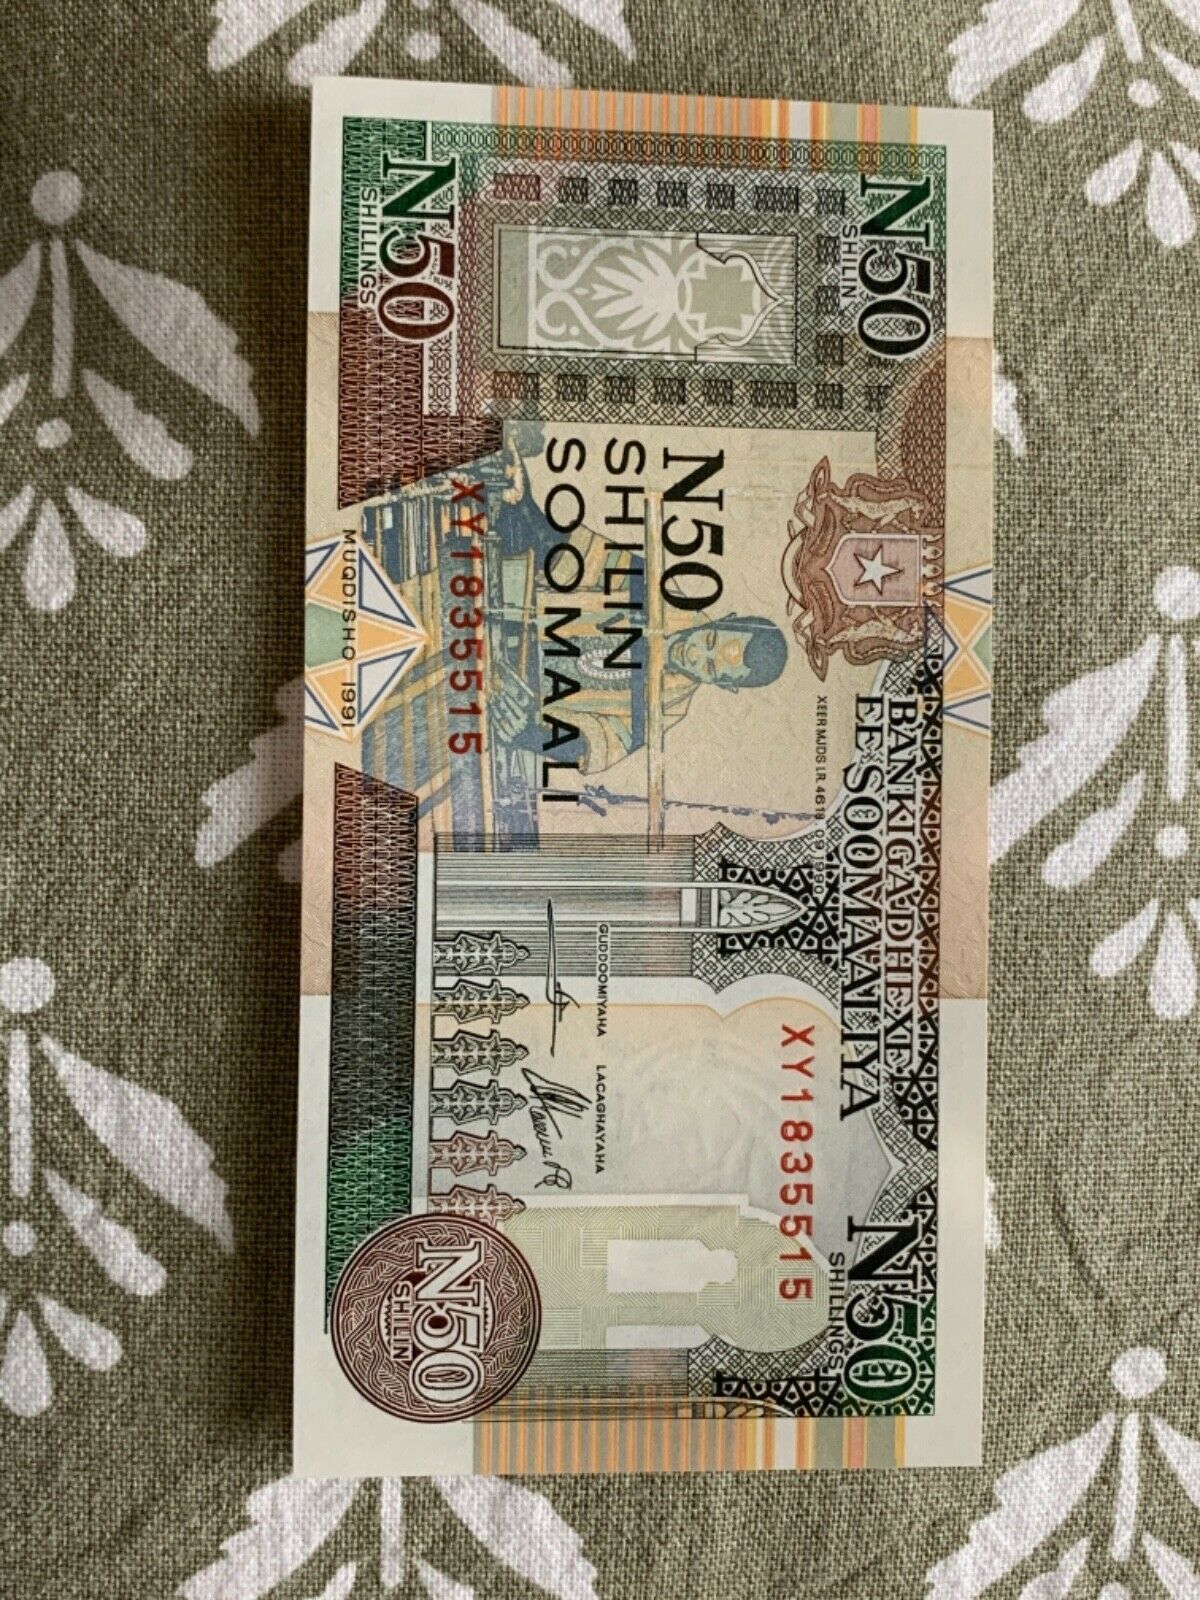 Crisp Banknote Of Somalia 50 Shillings